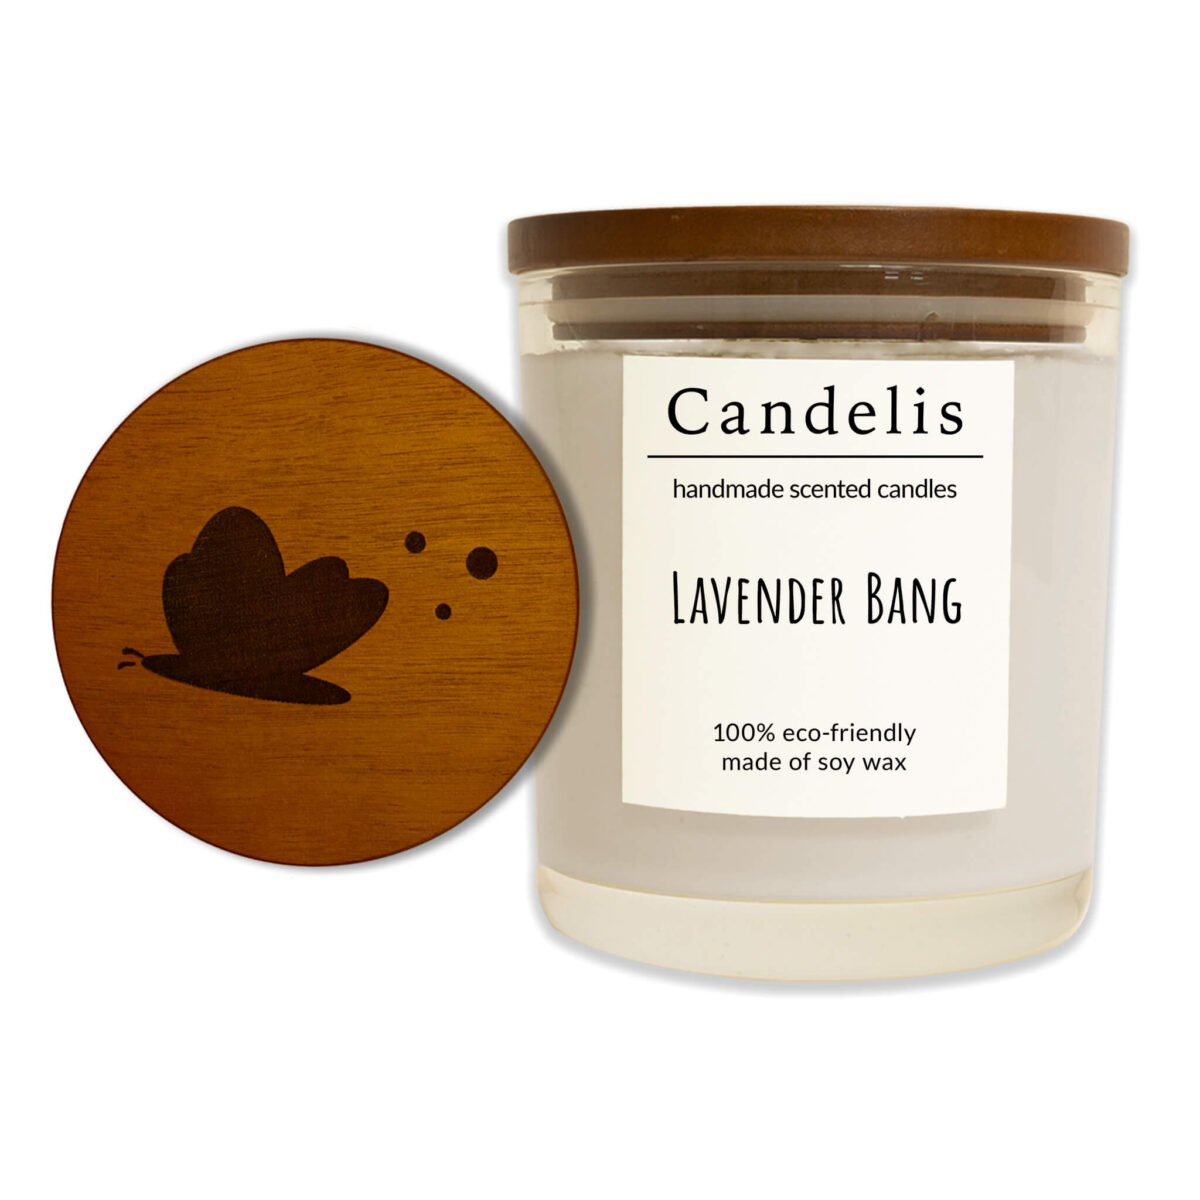 Lavender Bang basis collectie single